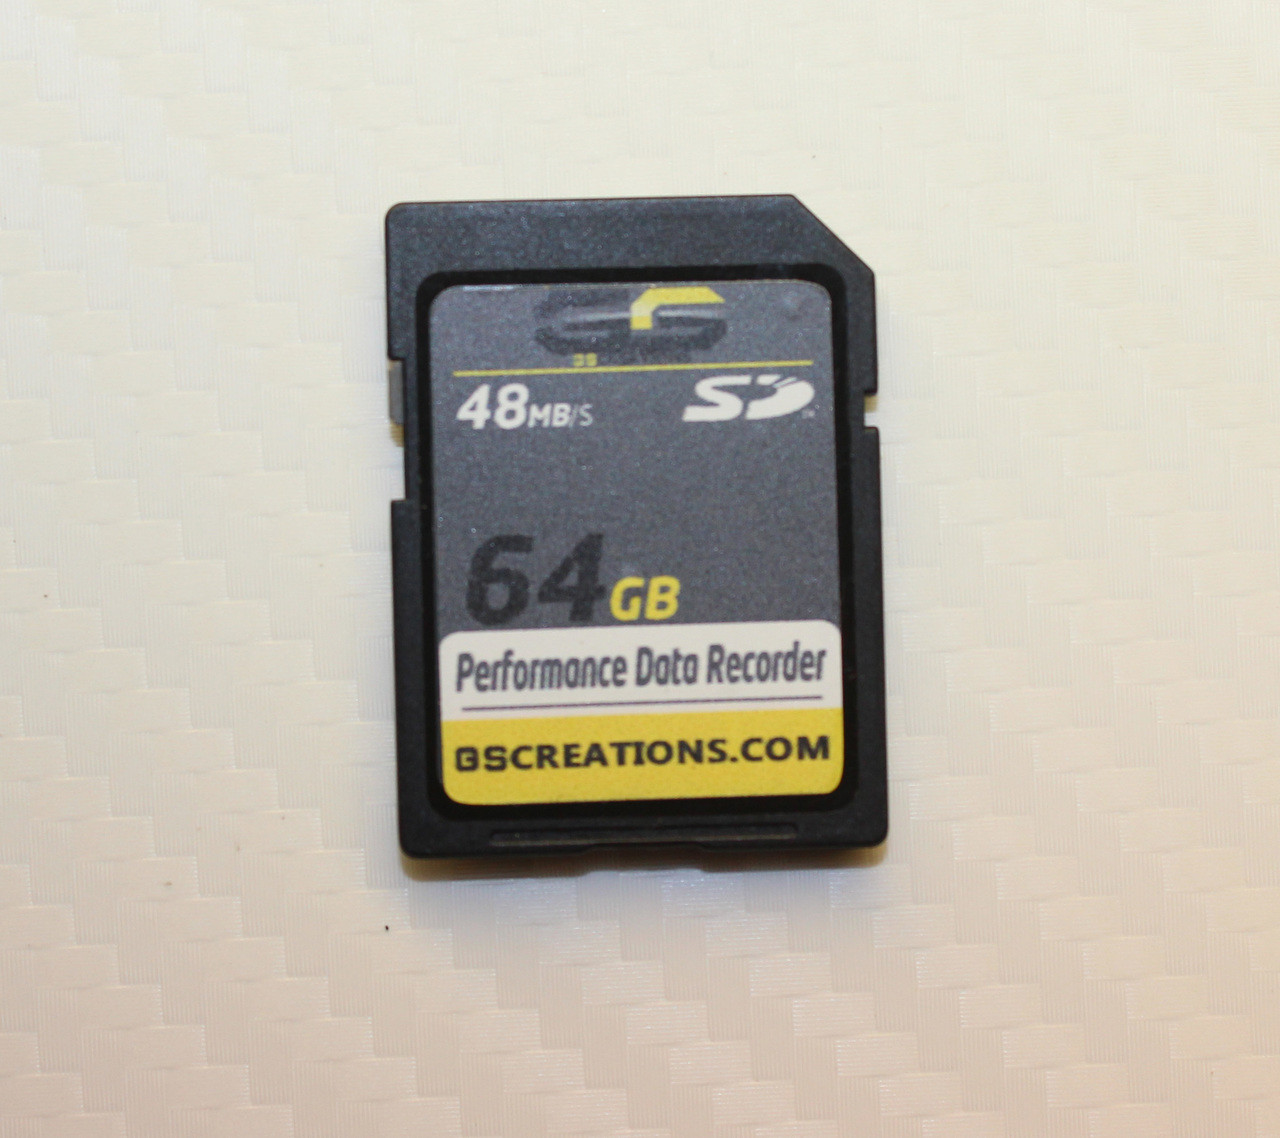 C7 Stingray Z06 ZR1 Grand Sport Corvette PDR SD 64 GB Memory Card